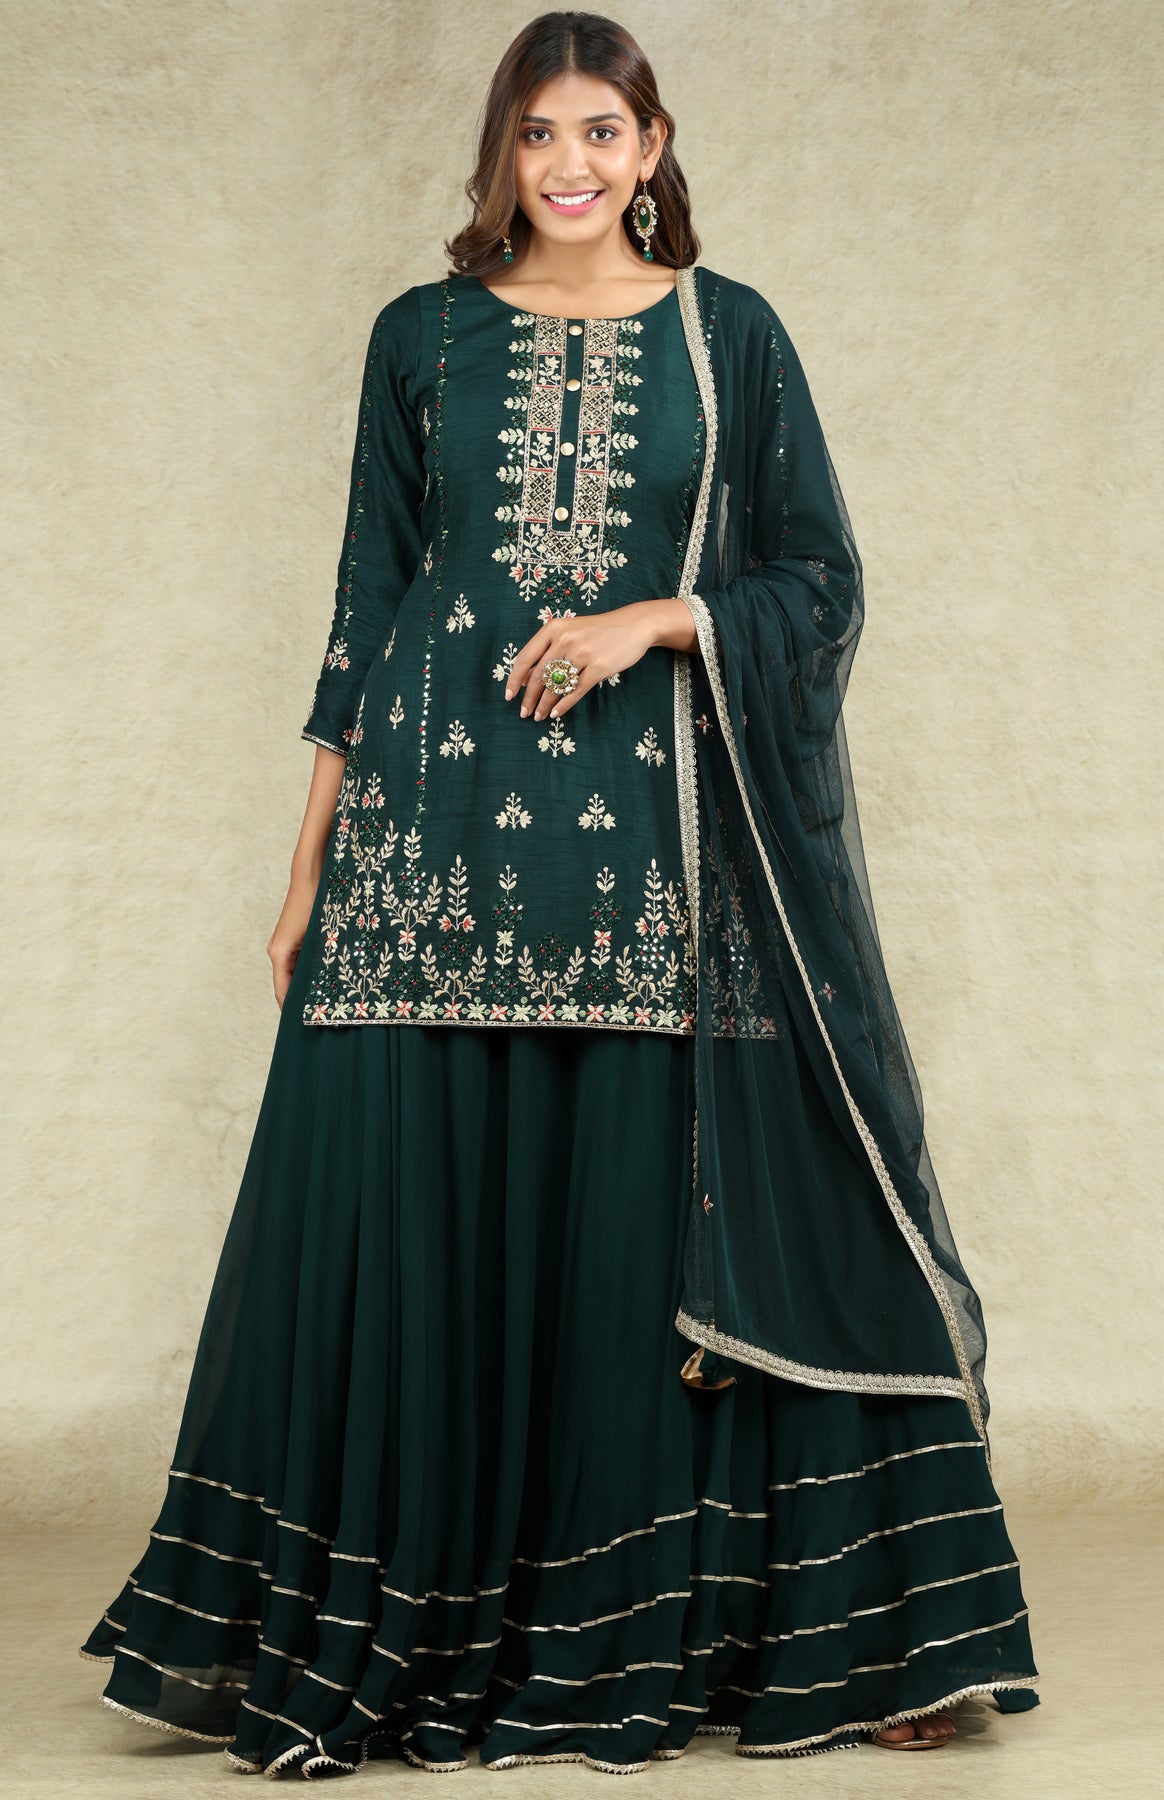 Lacha Dress Or Gaghra | gintaa.com